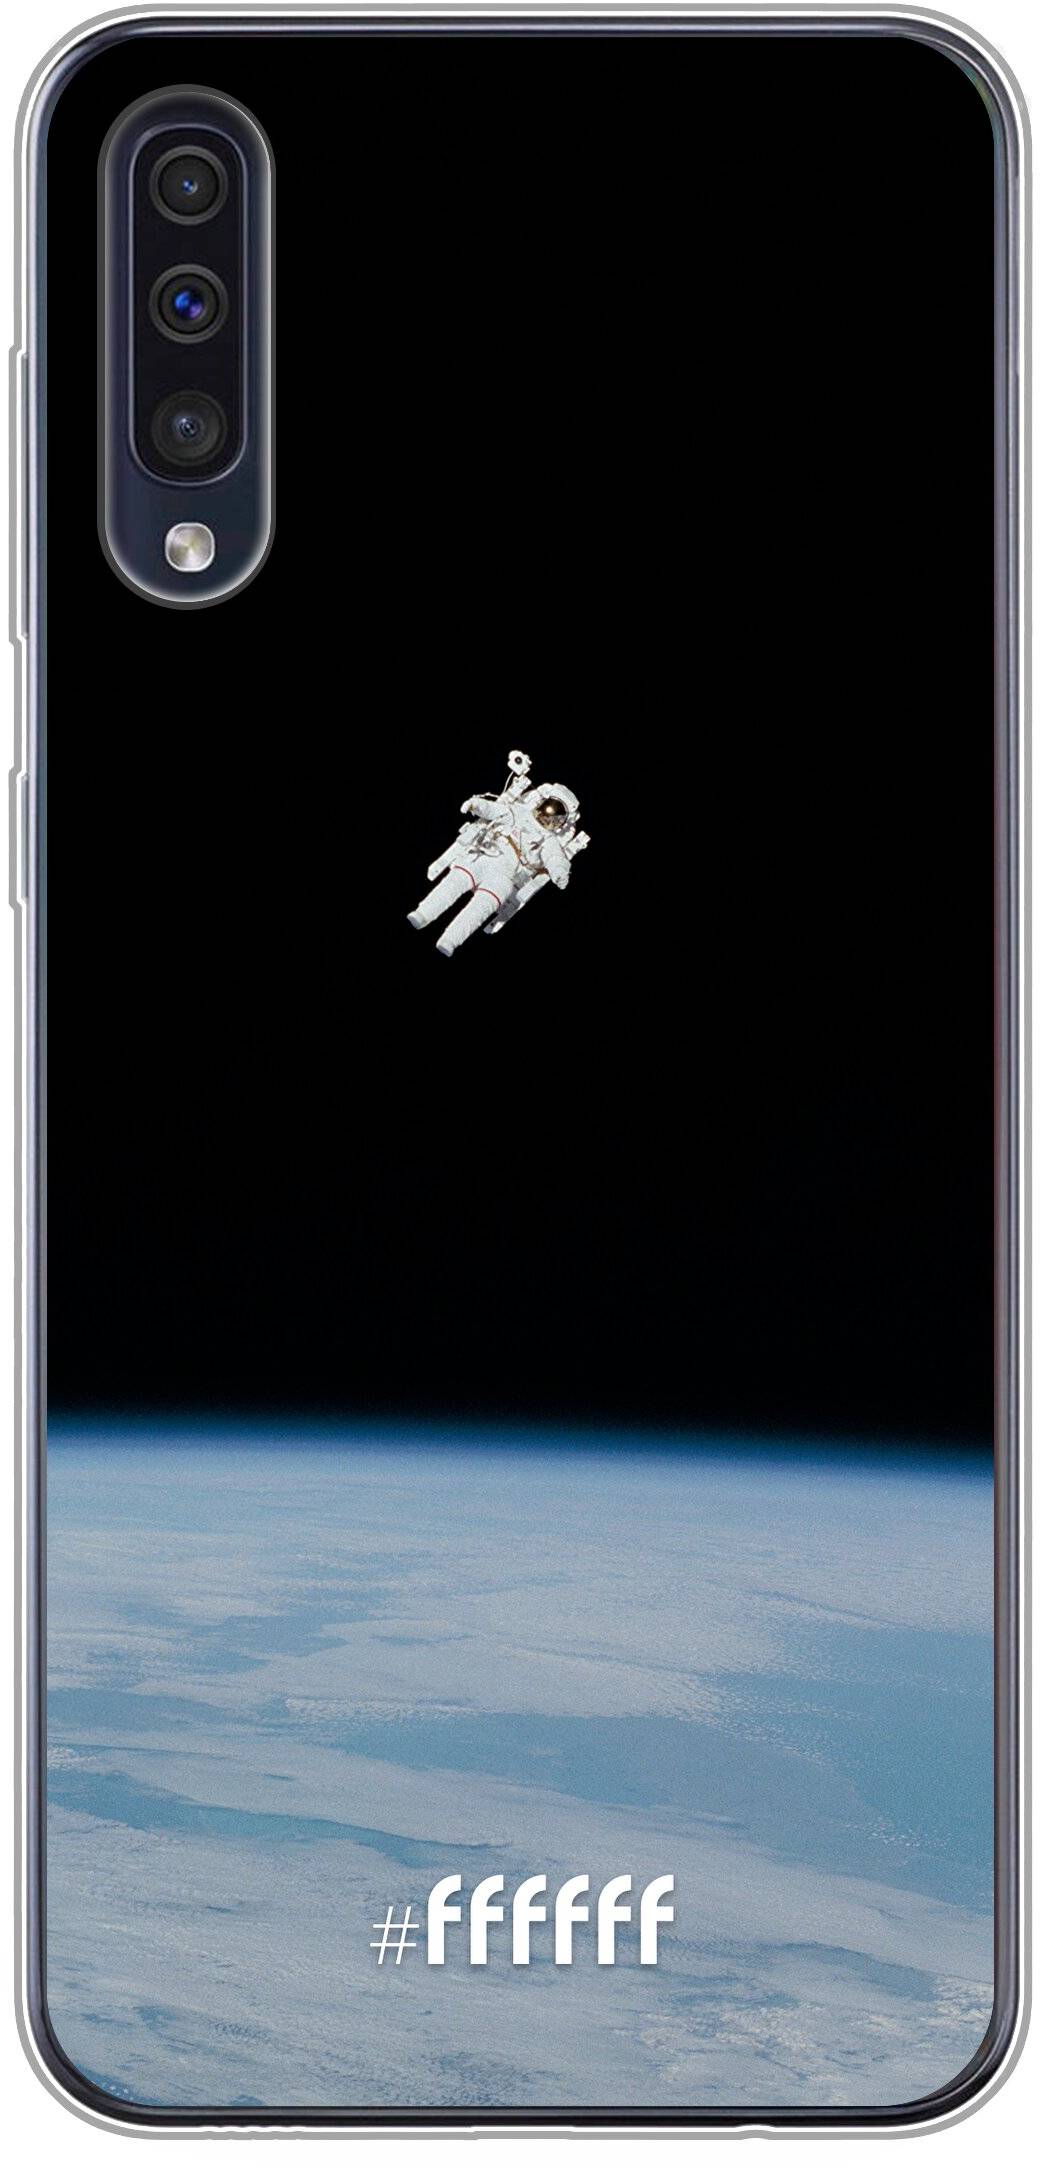 Spacewalk Galaxy A50